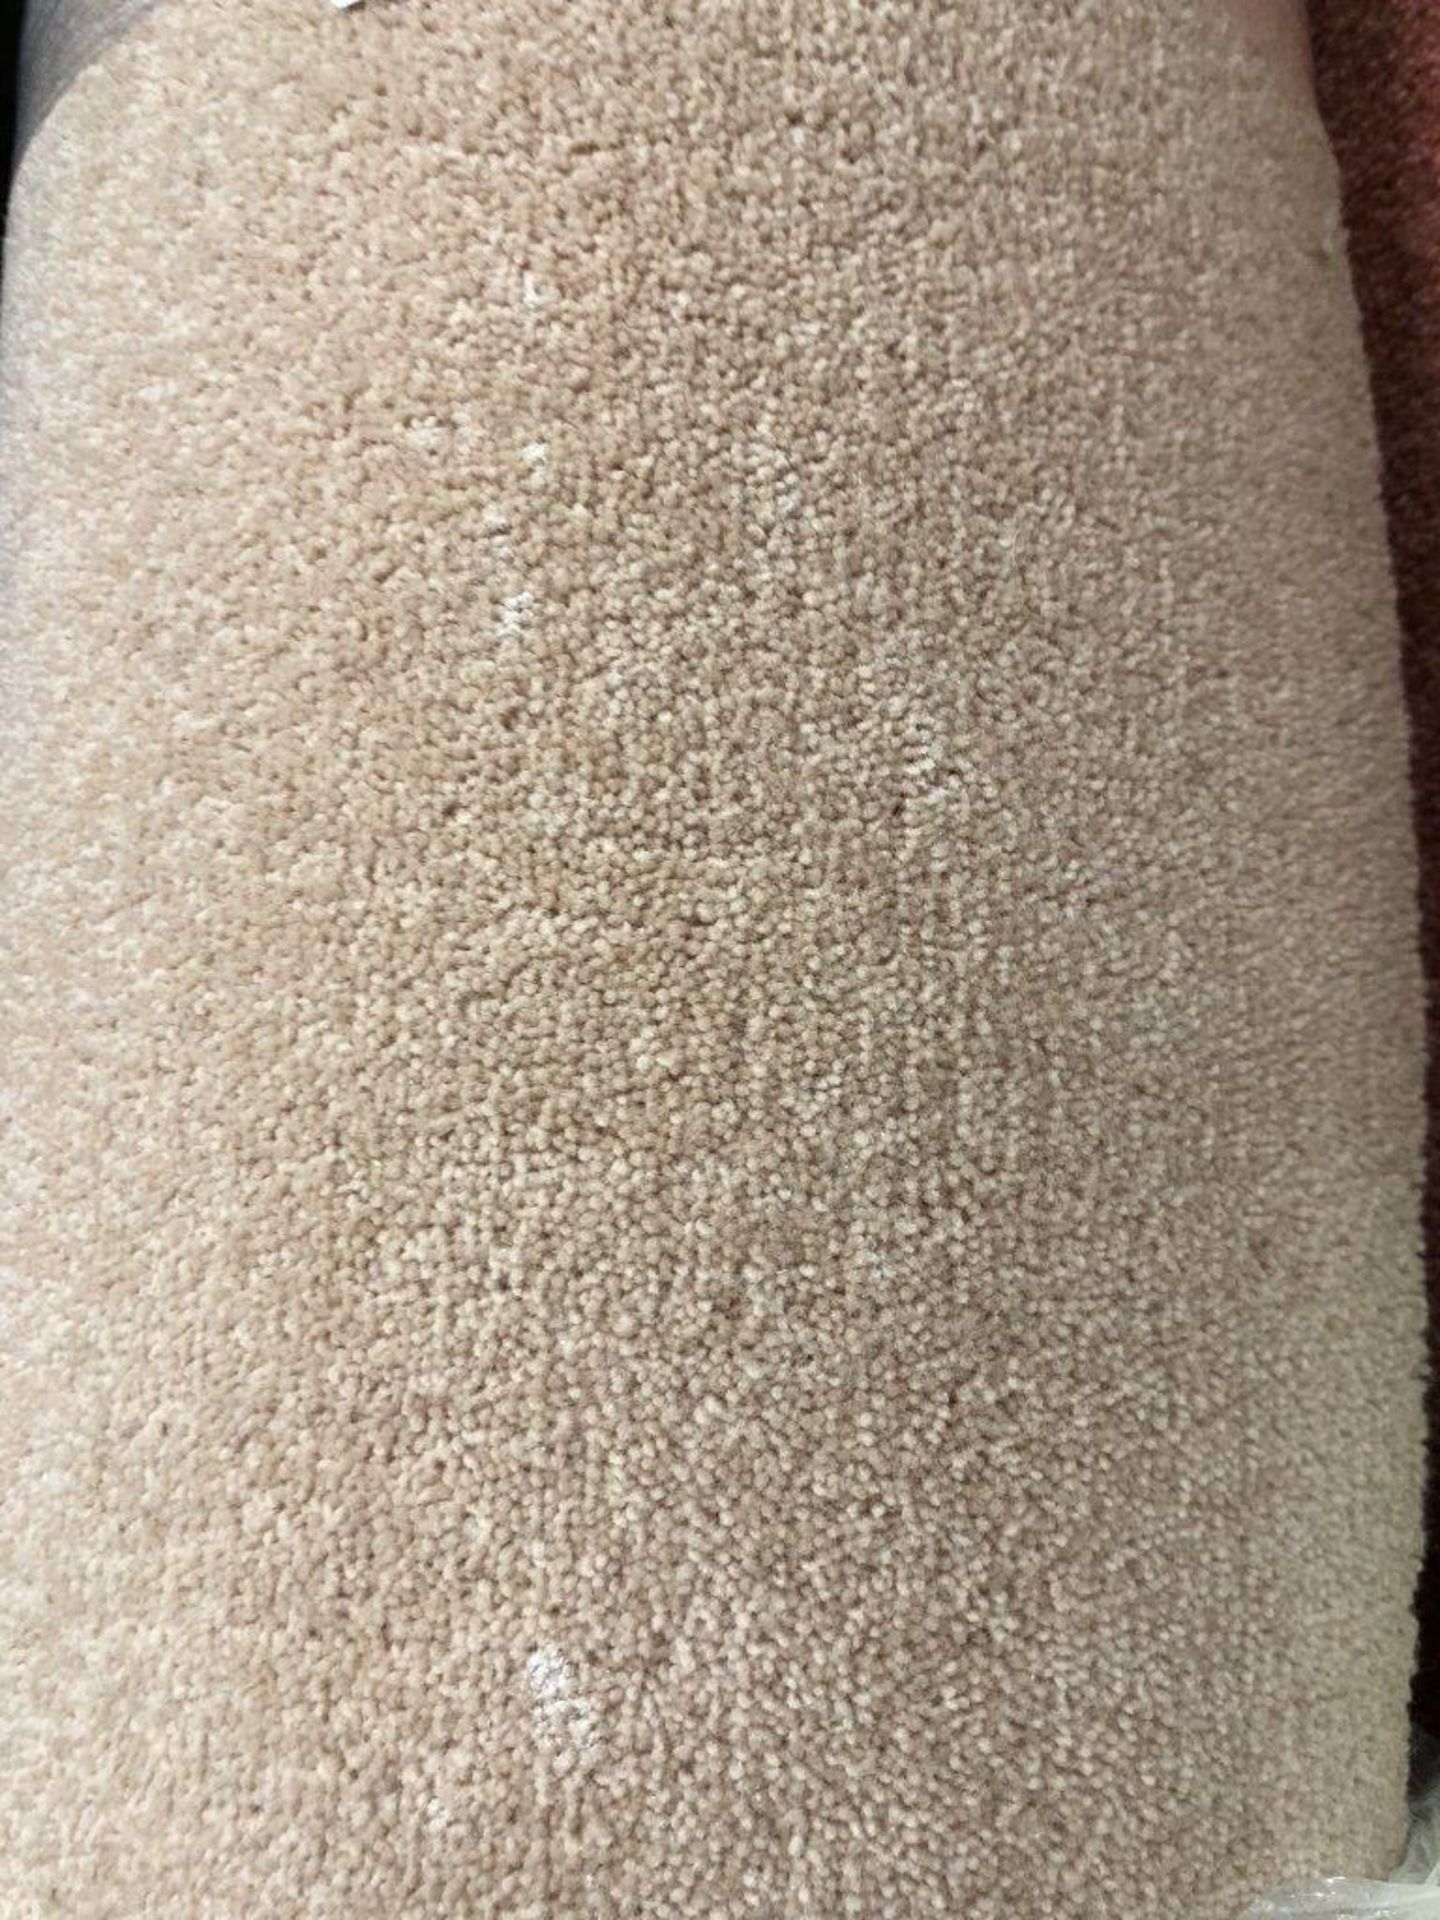 1 x Ryalux Carpet End Roll - Cream 2.9x4.0m2 - Image 3 of 3